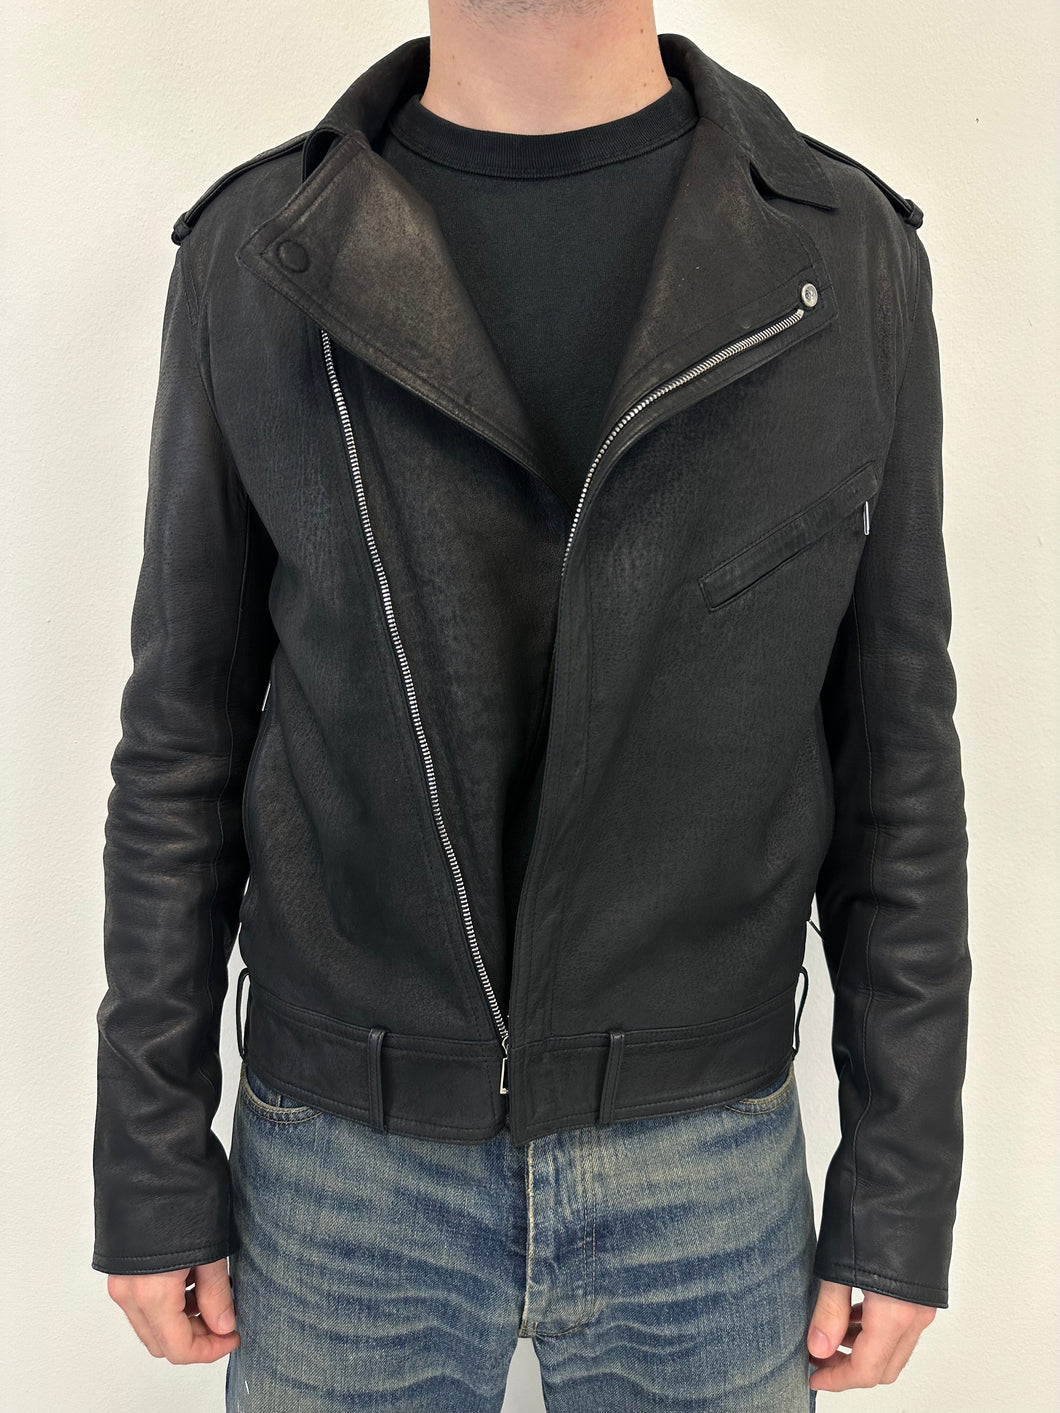 FW2013 Dior perfecto biker leather jacket